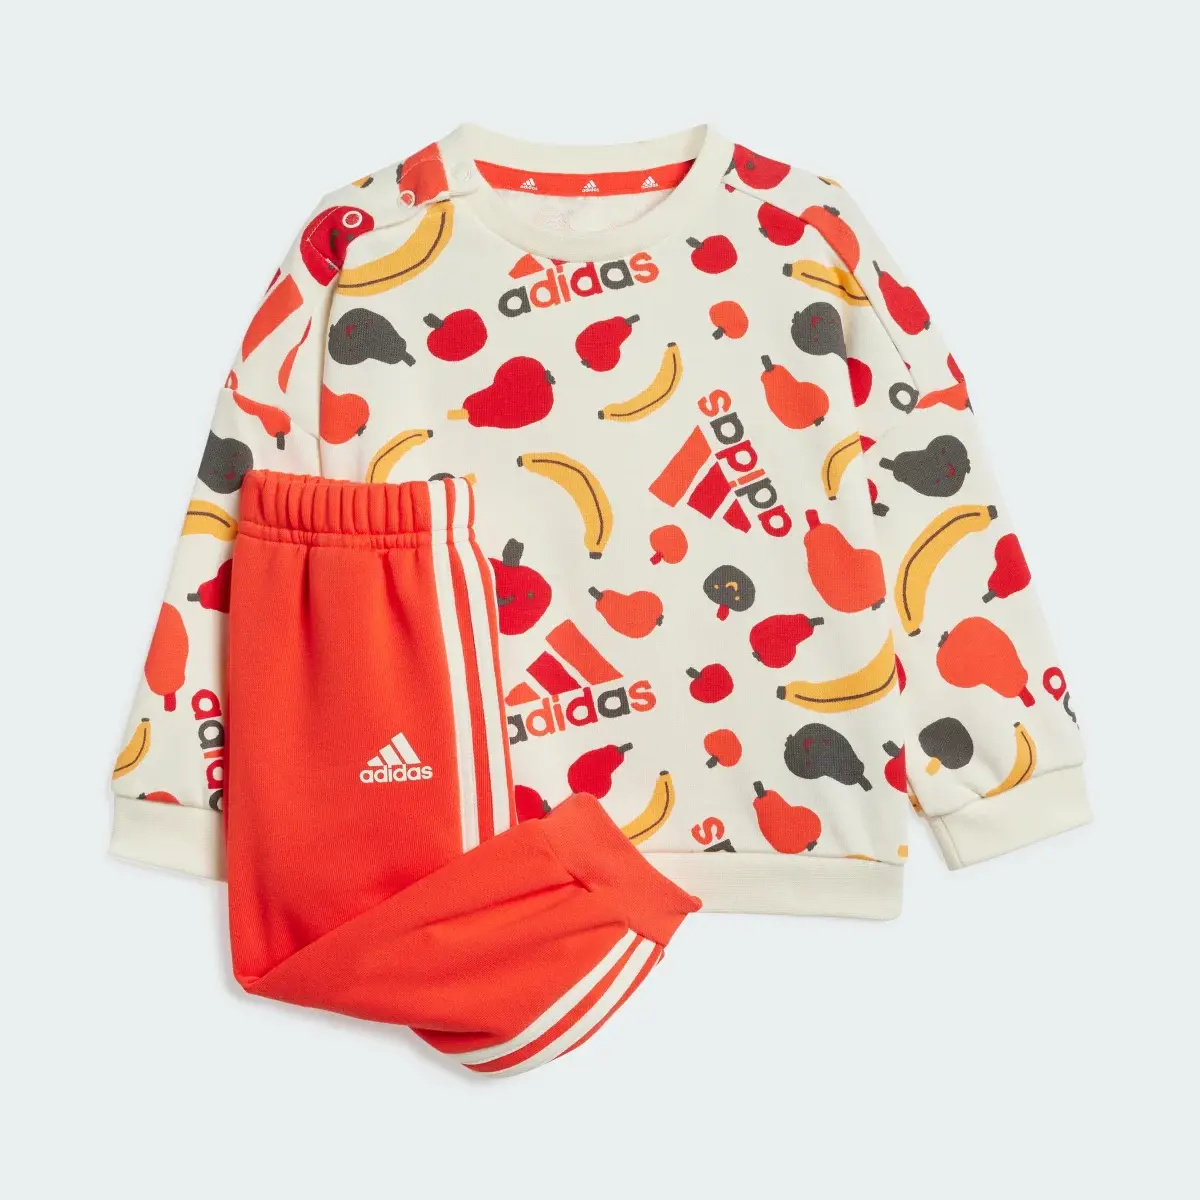 Adidas Ensemble sportswear imprimé intégral Essentials Enfants. 2